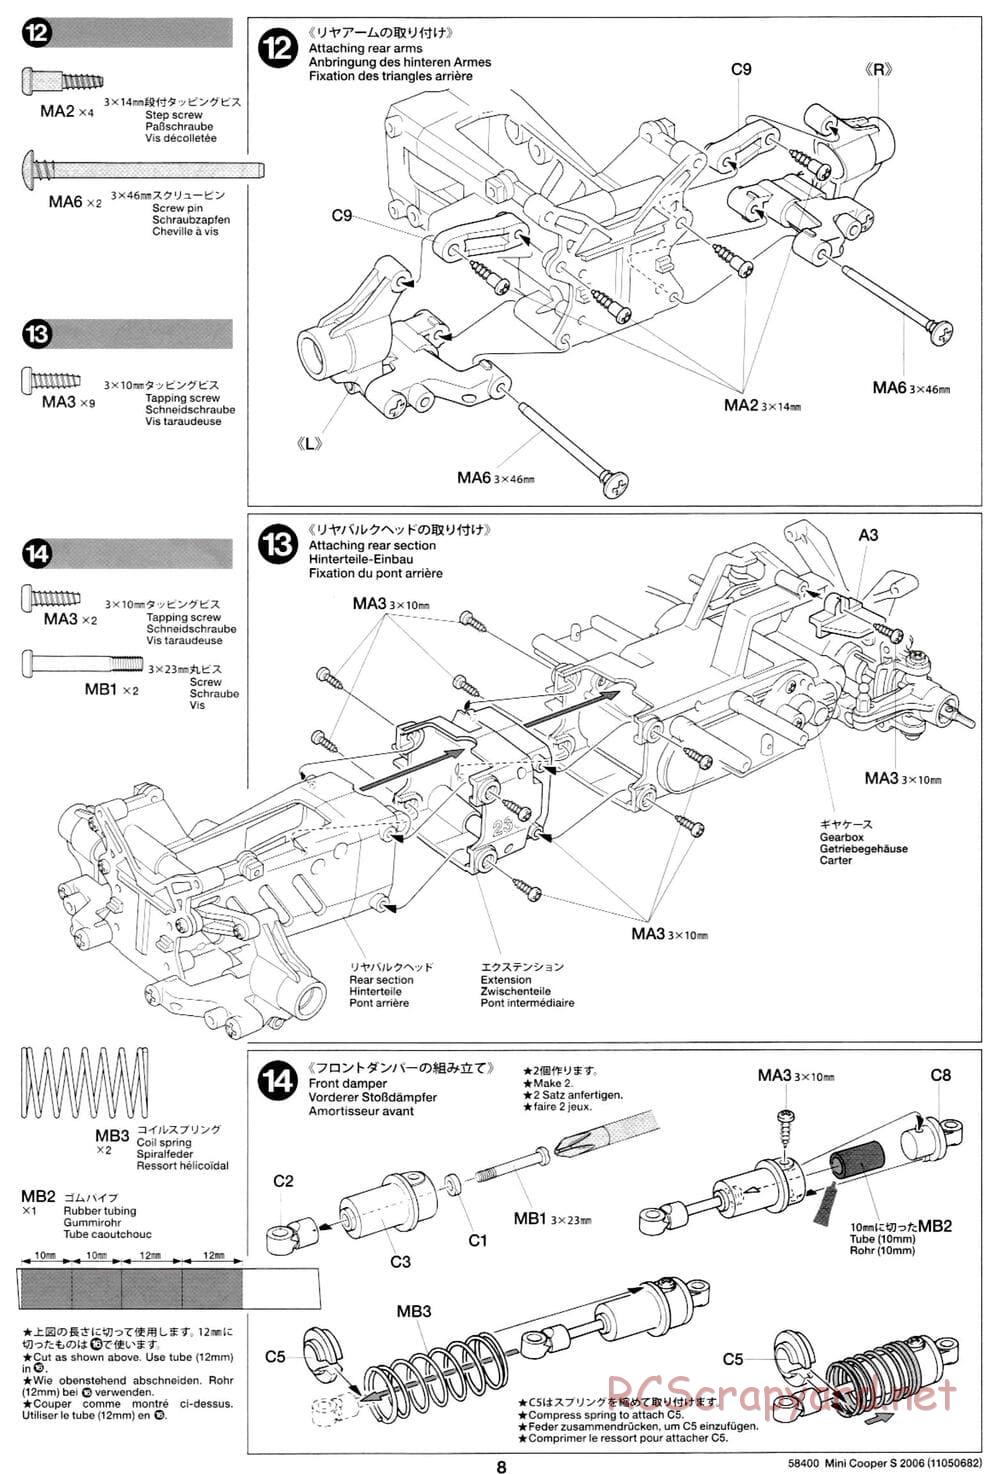 Tamiya - Mini Cooper S 2006 - M03L Chassis - Manual - Page 8